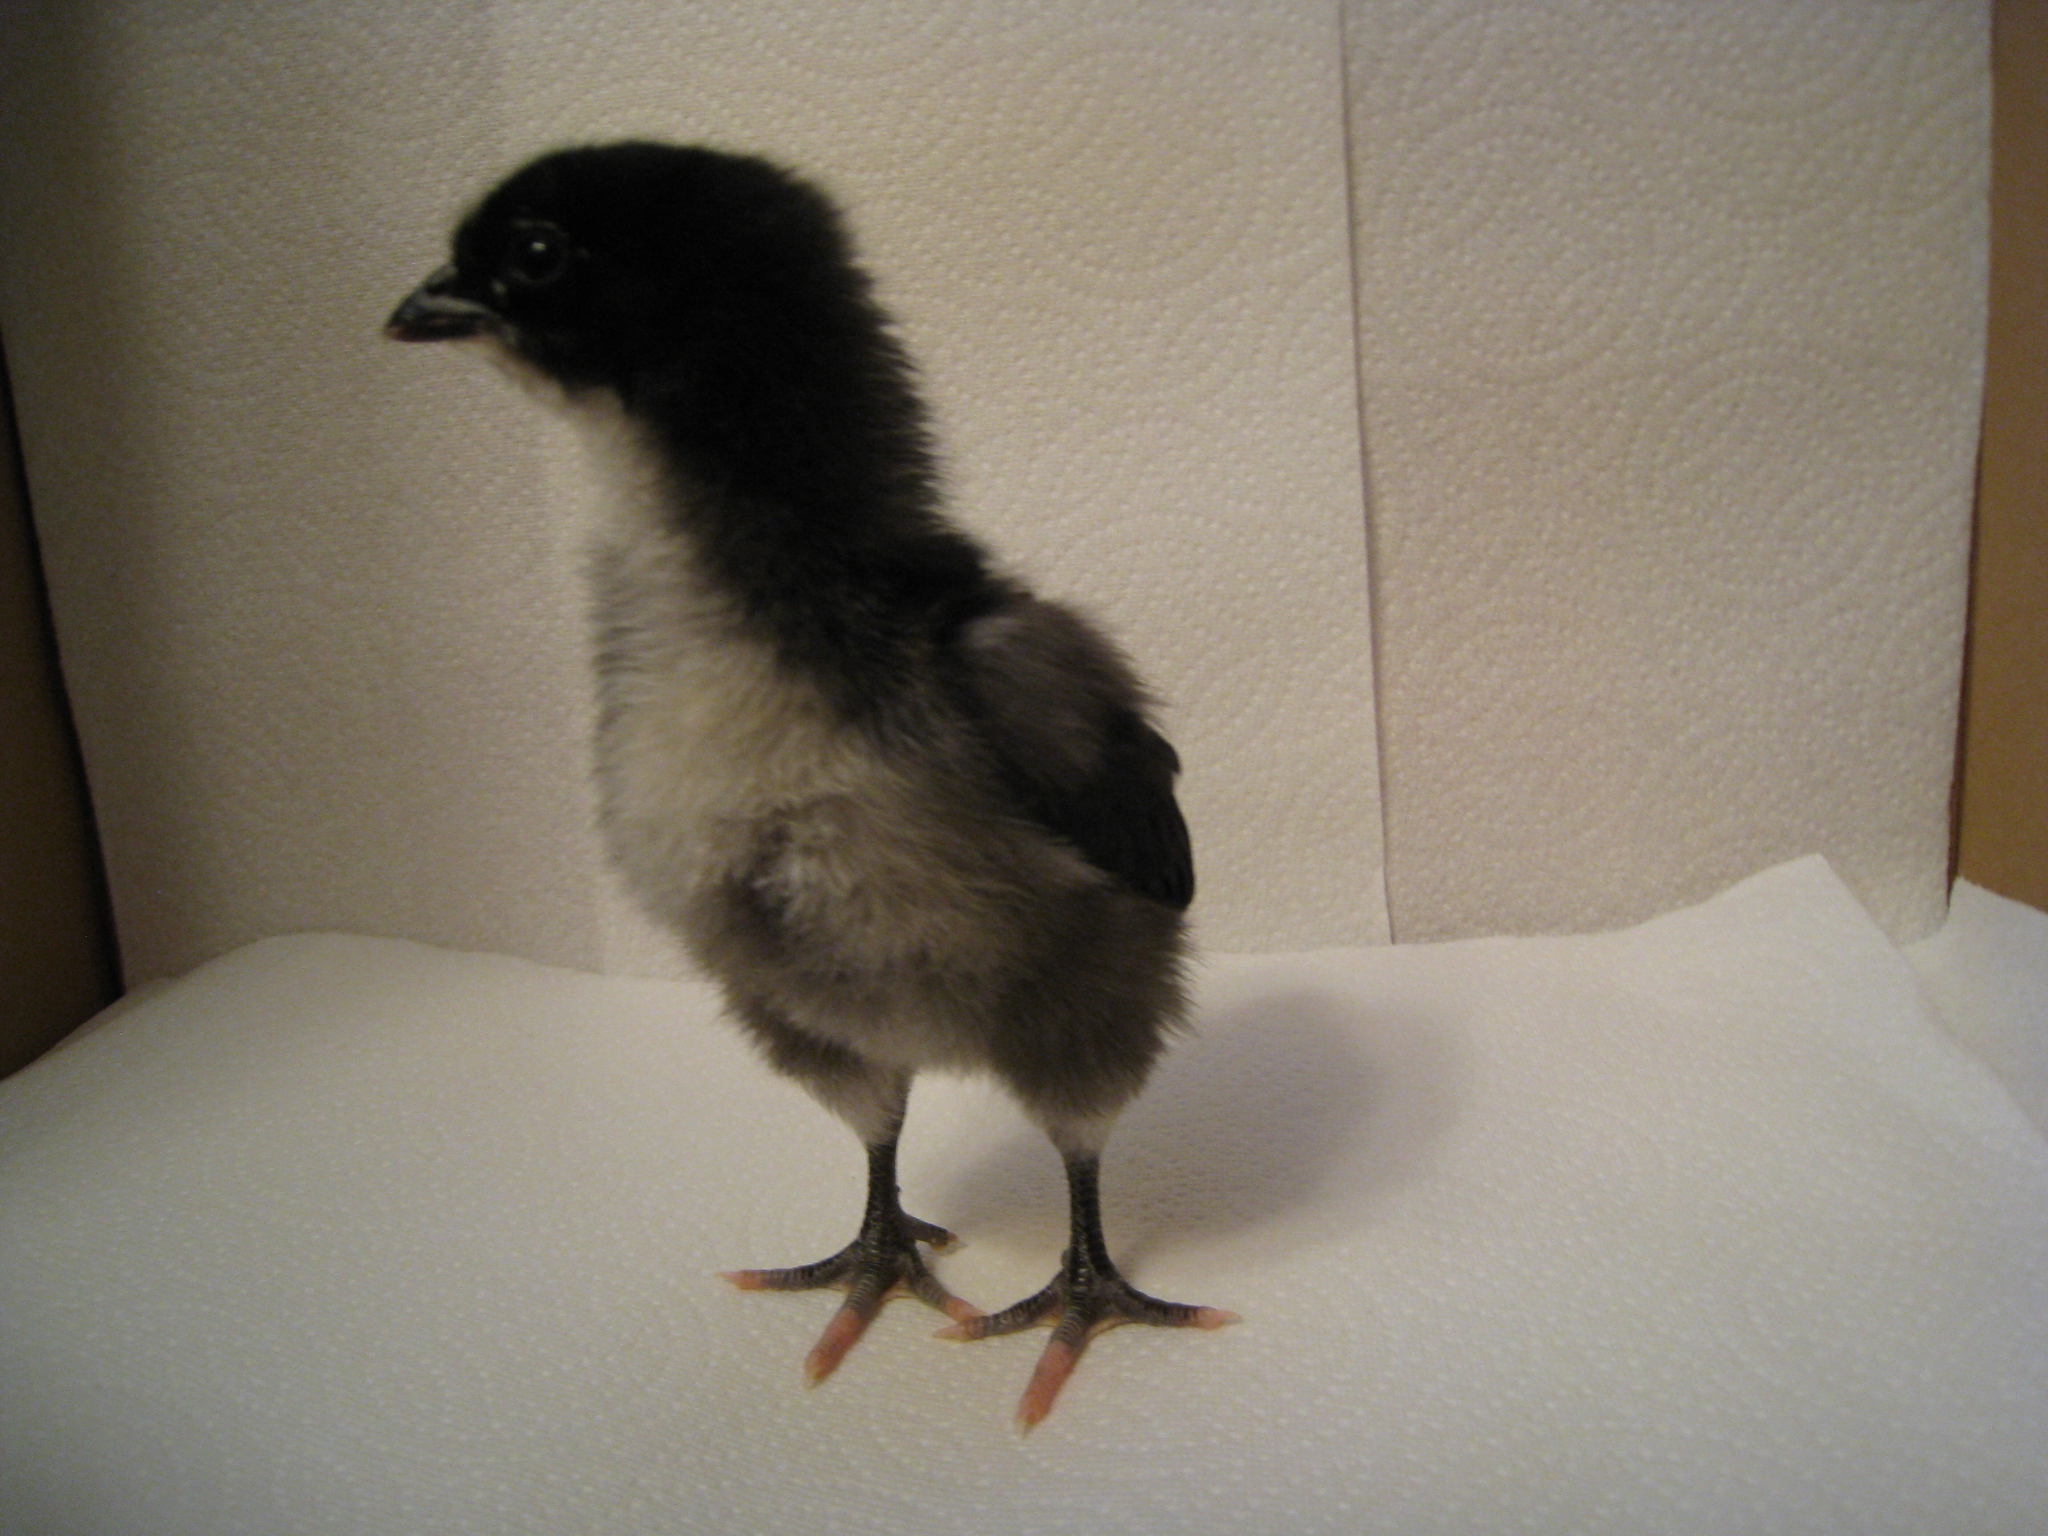 chick #2